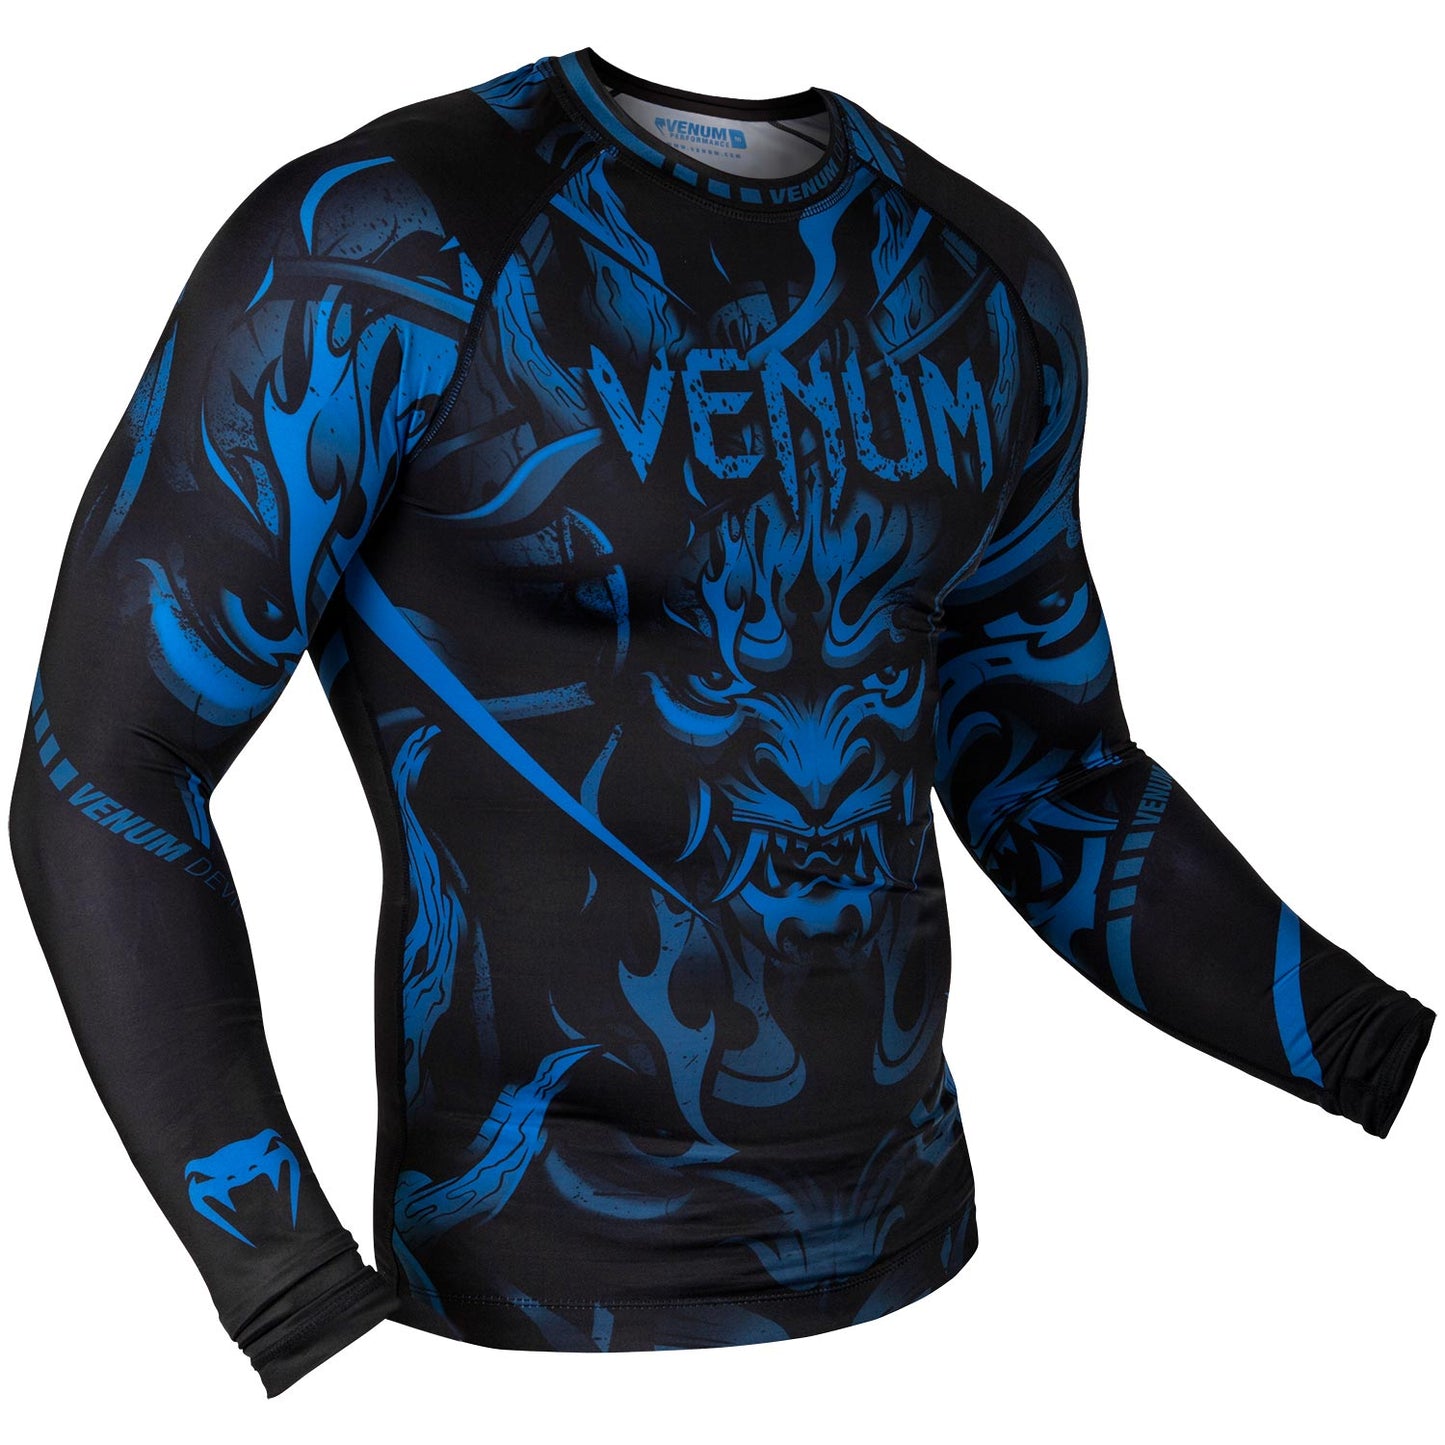 Venum Devil Rashguard - Long Sleeves - Navy Blue/Black